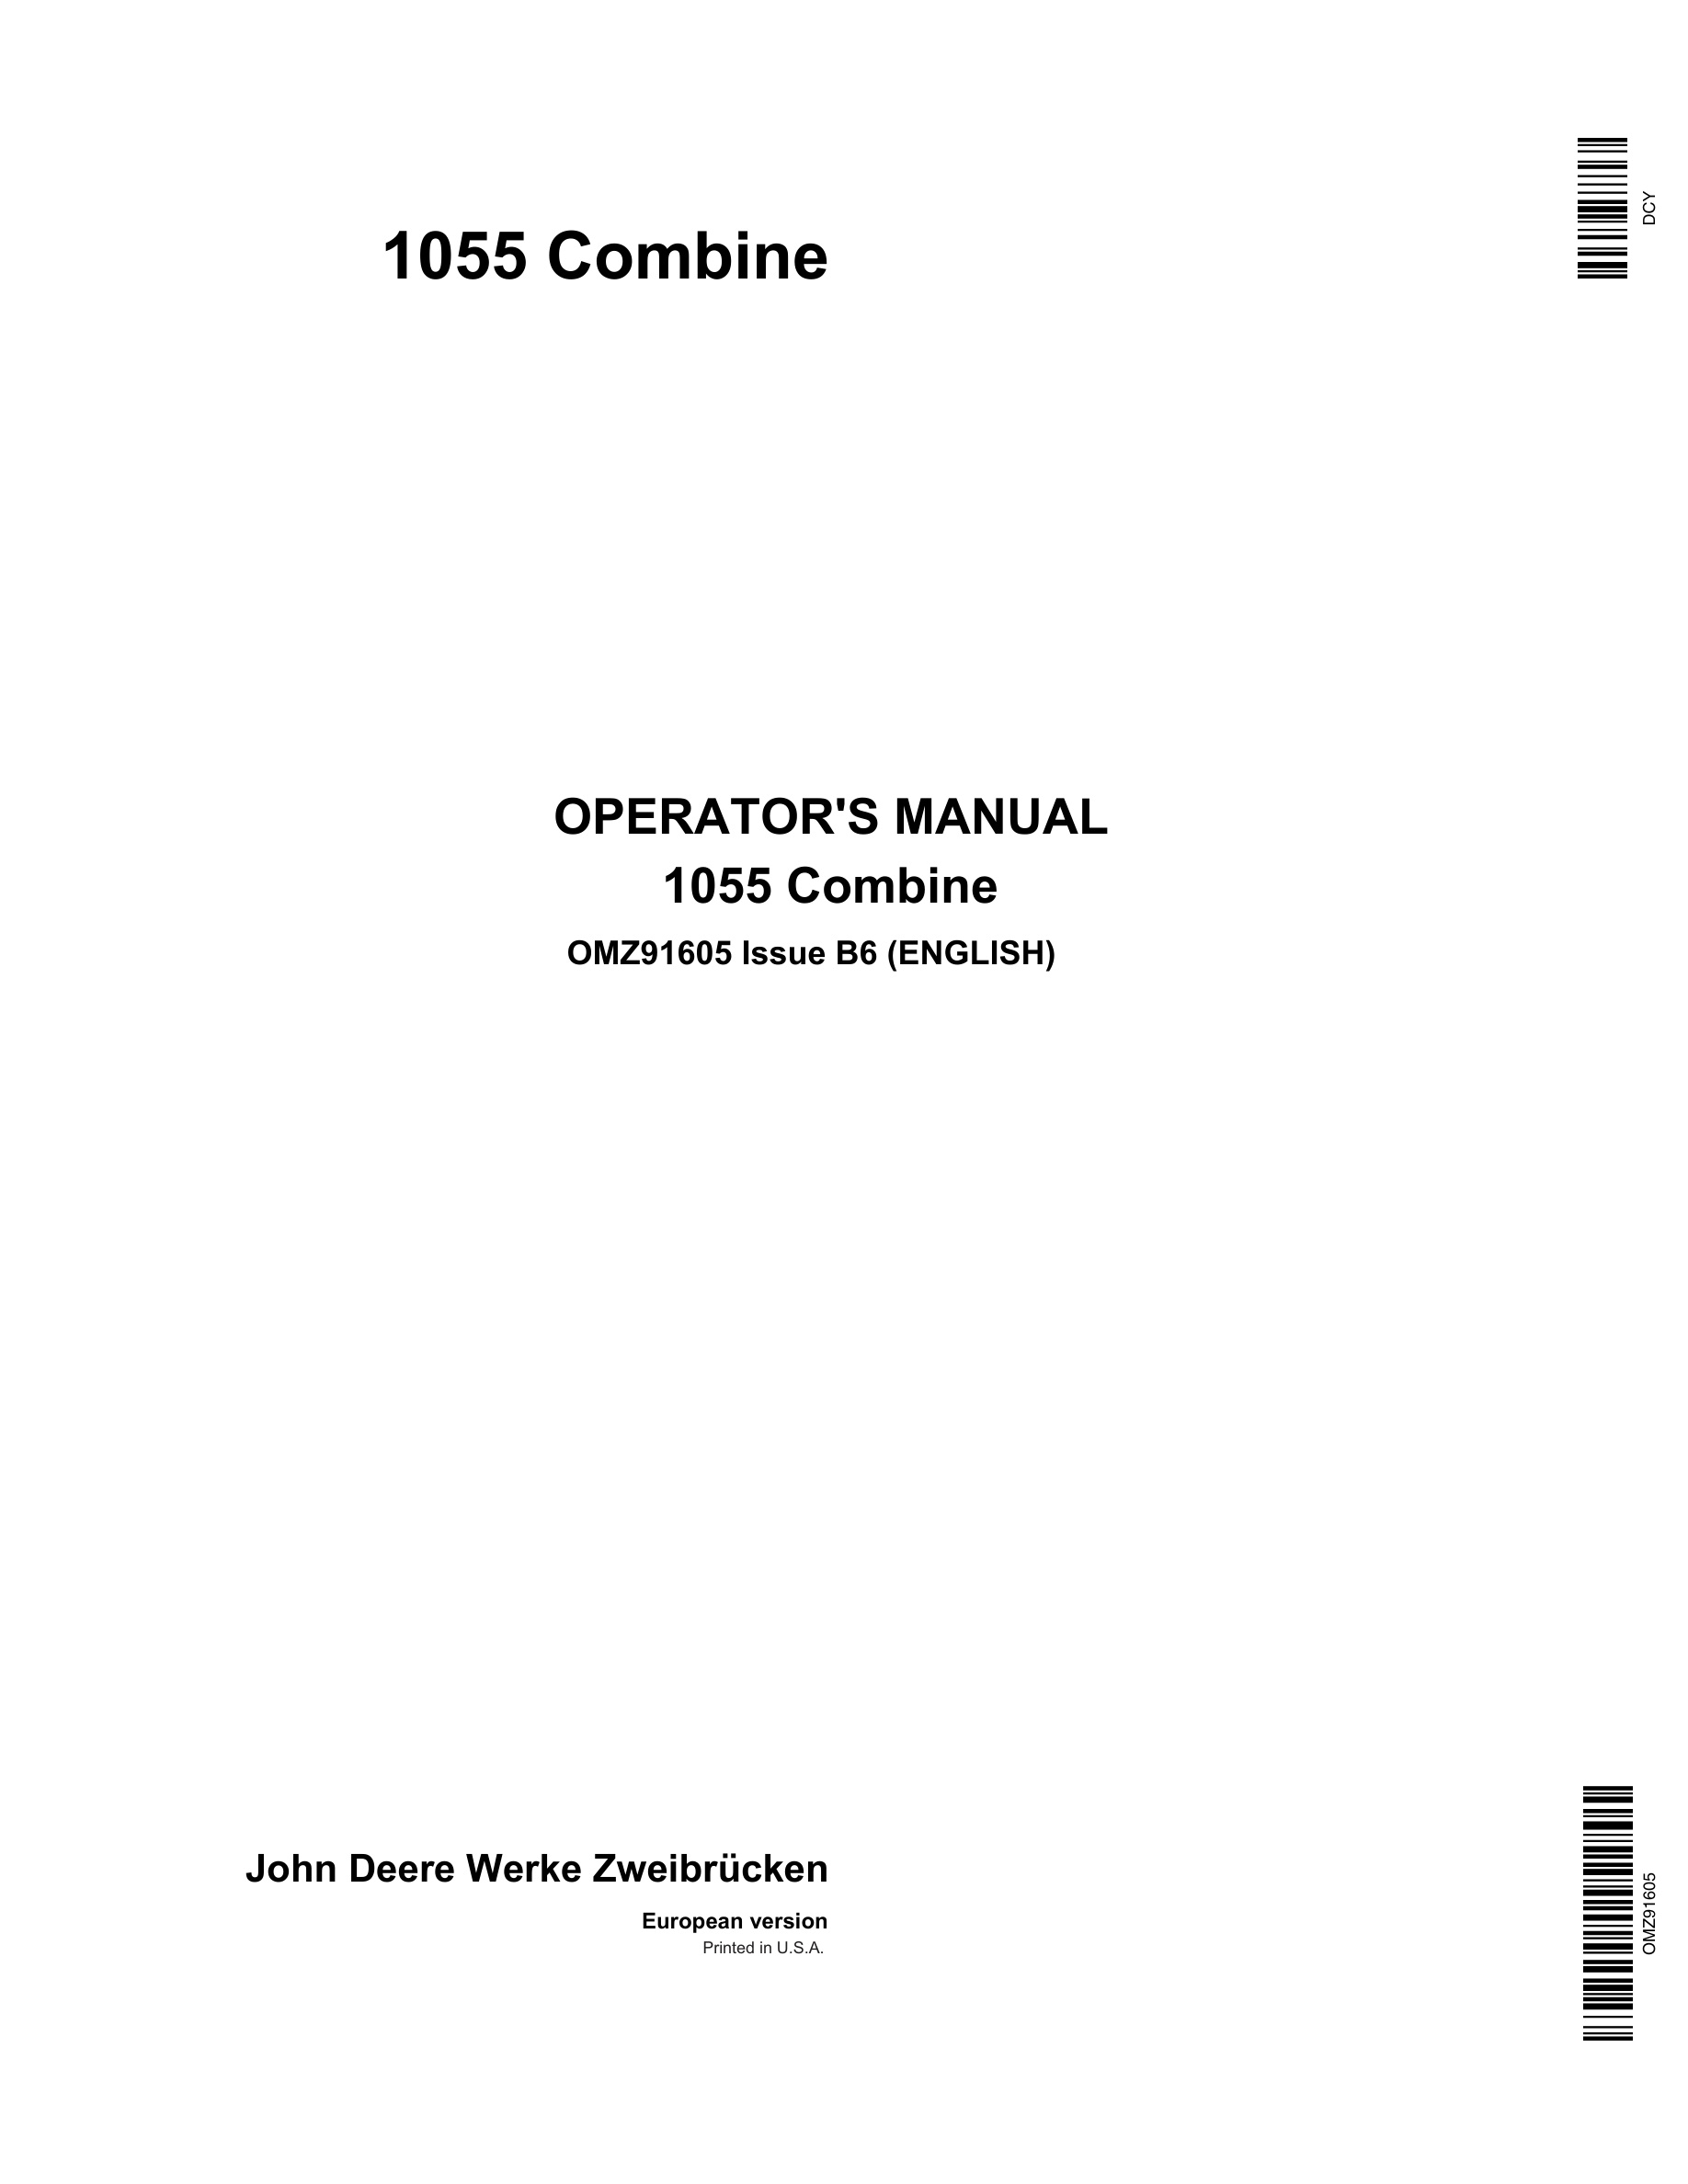 John Deere 1055 Combine Operator Manual OMZ91605-1